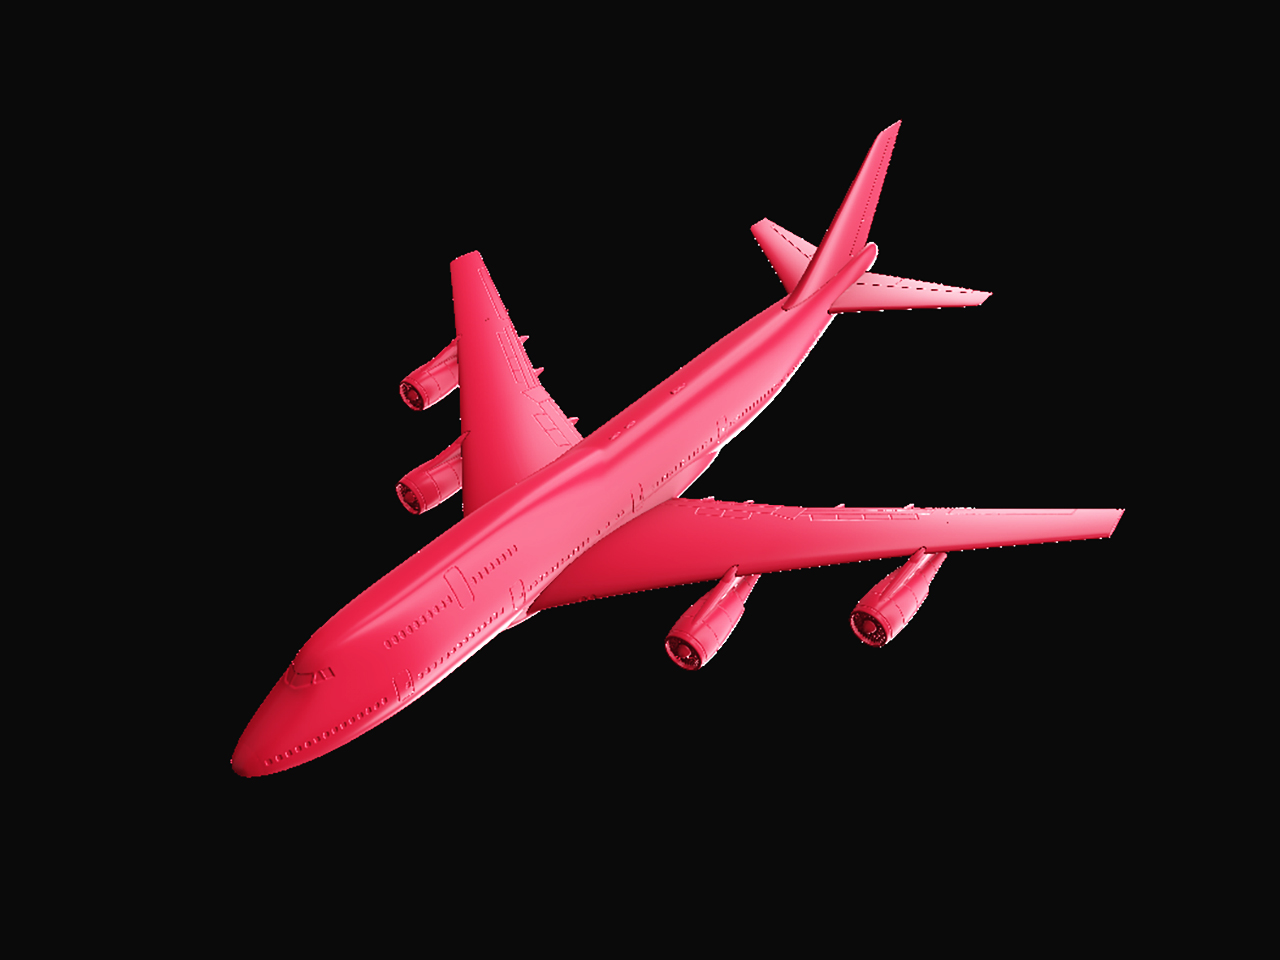 3D Model - The Flight Attendant Exhibit